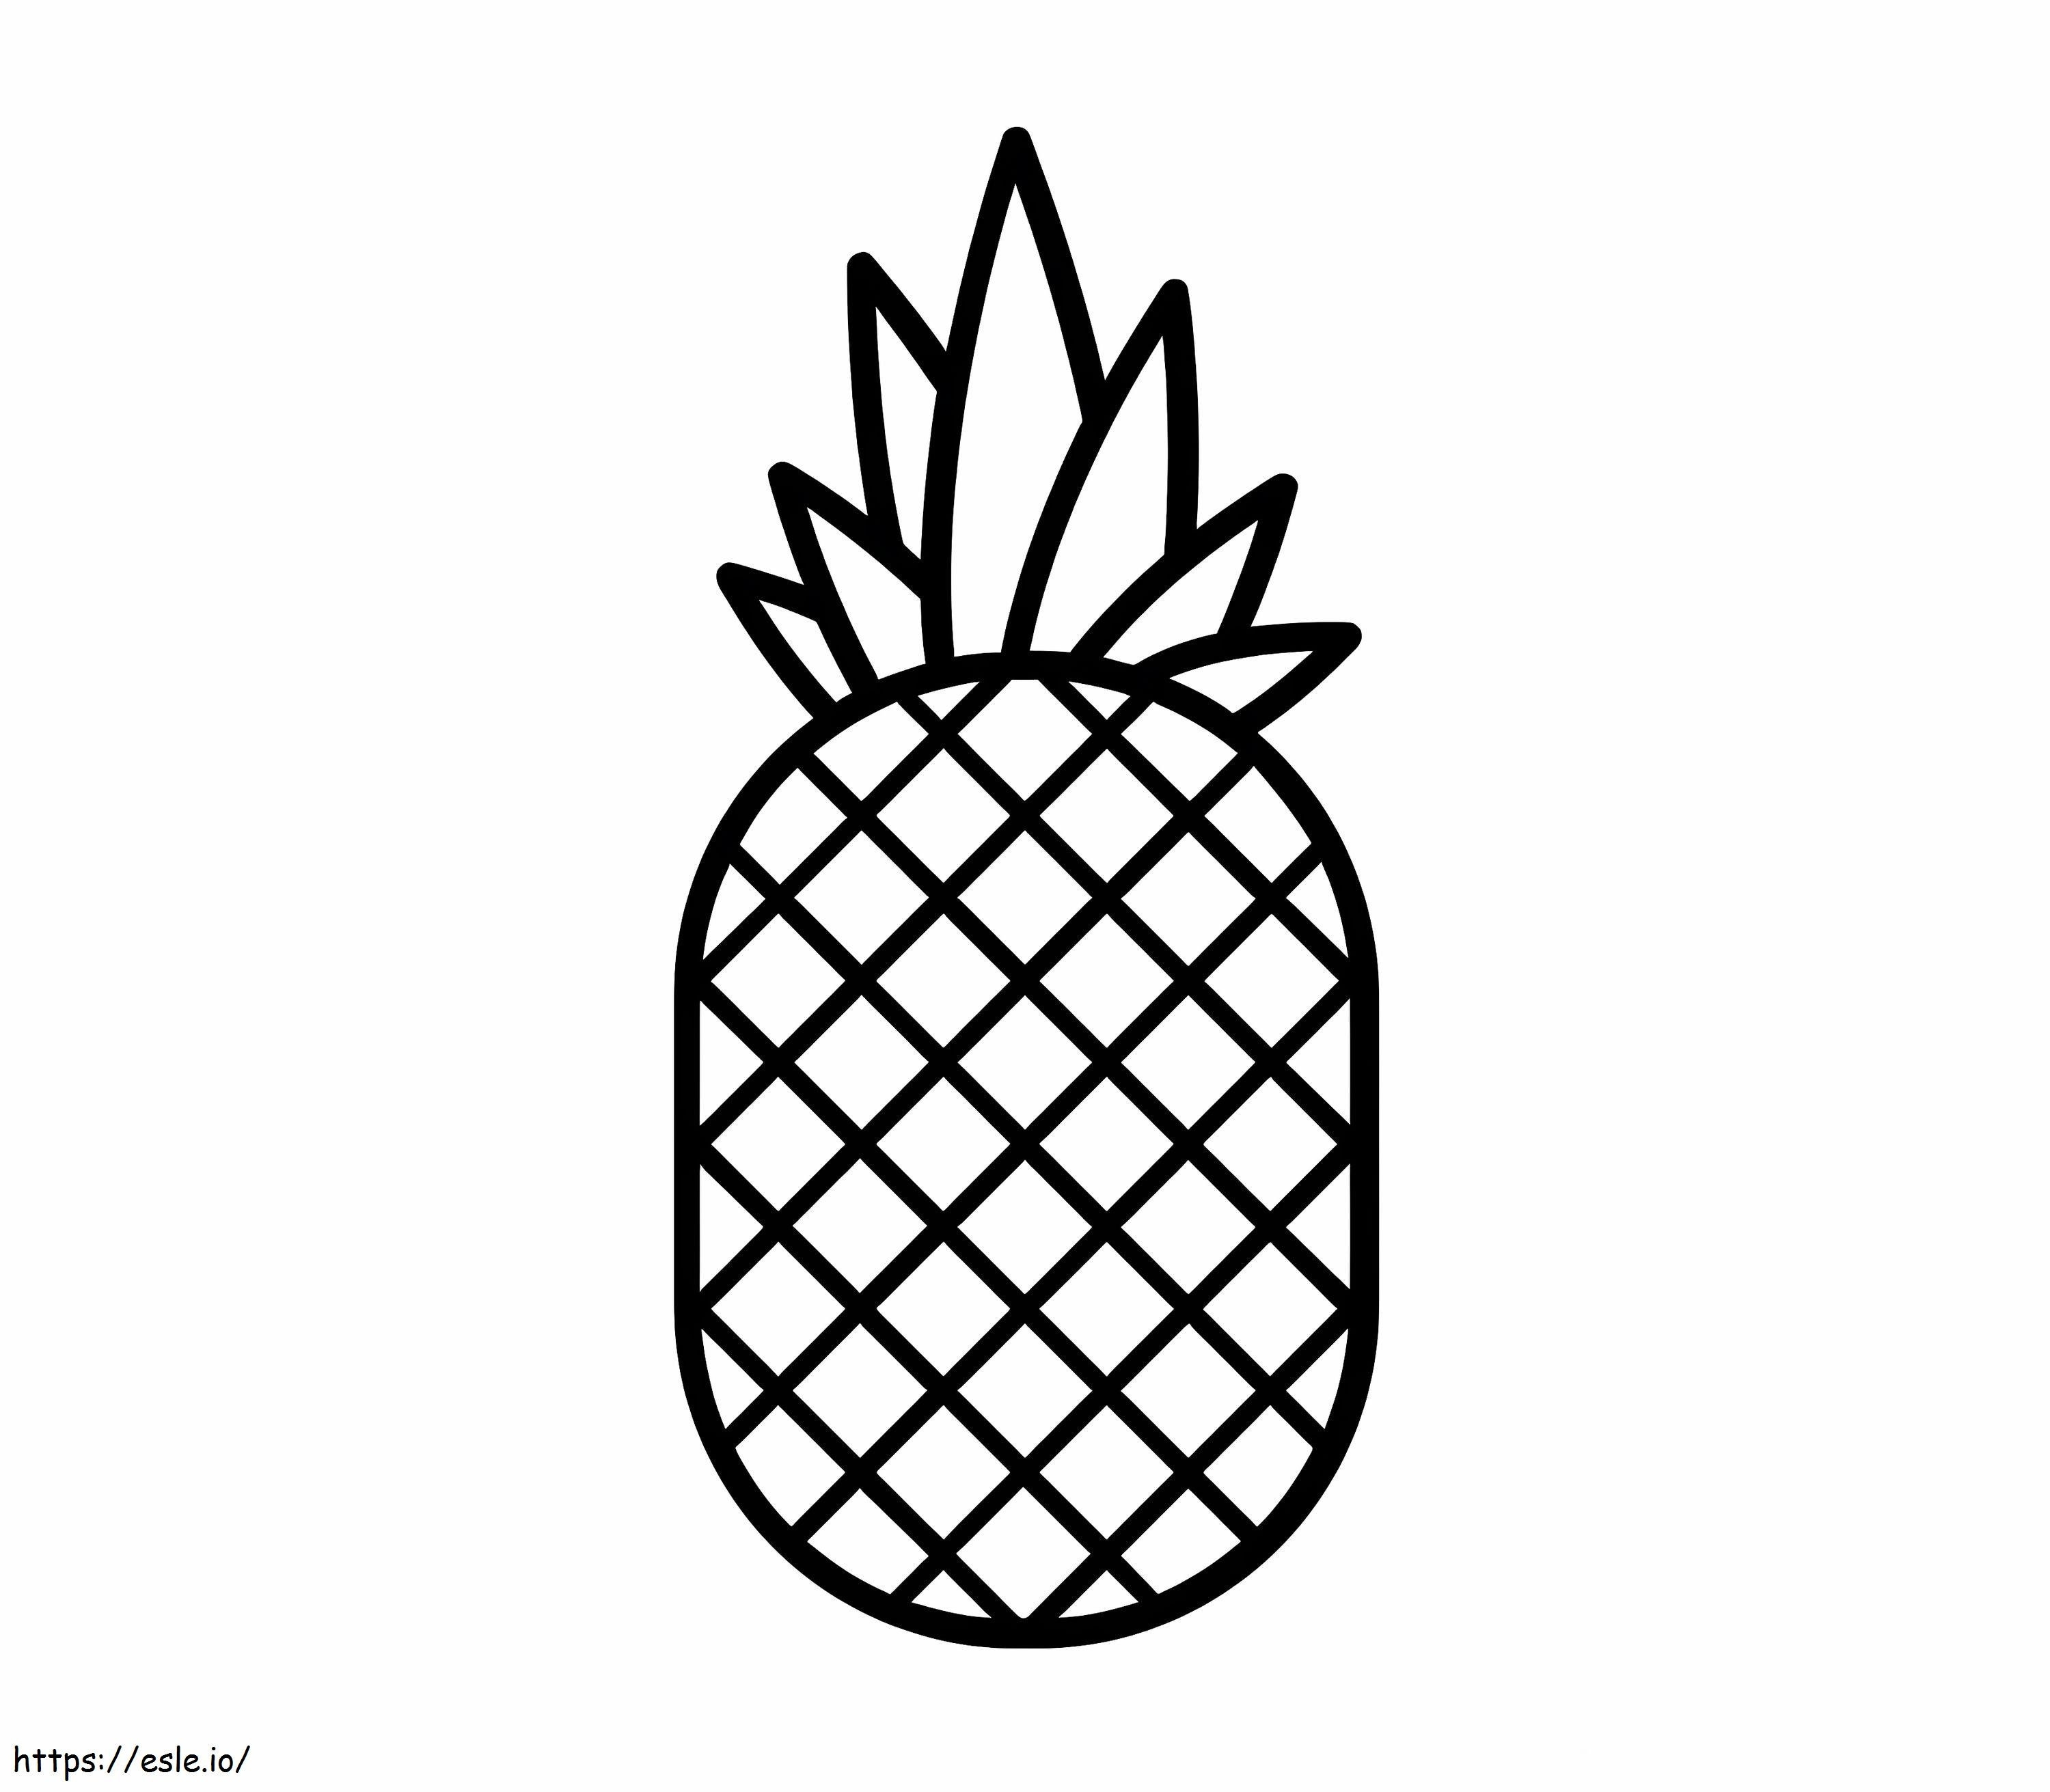 Łatwy rysunek ananasa kolorowanka